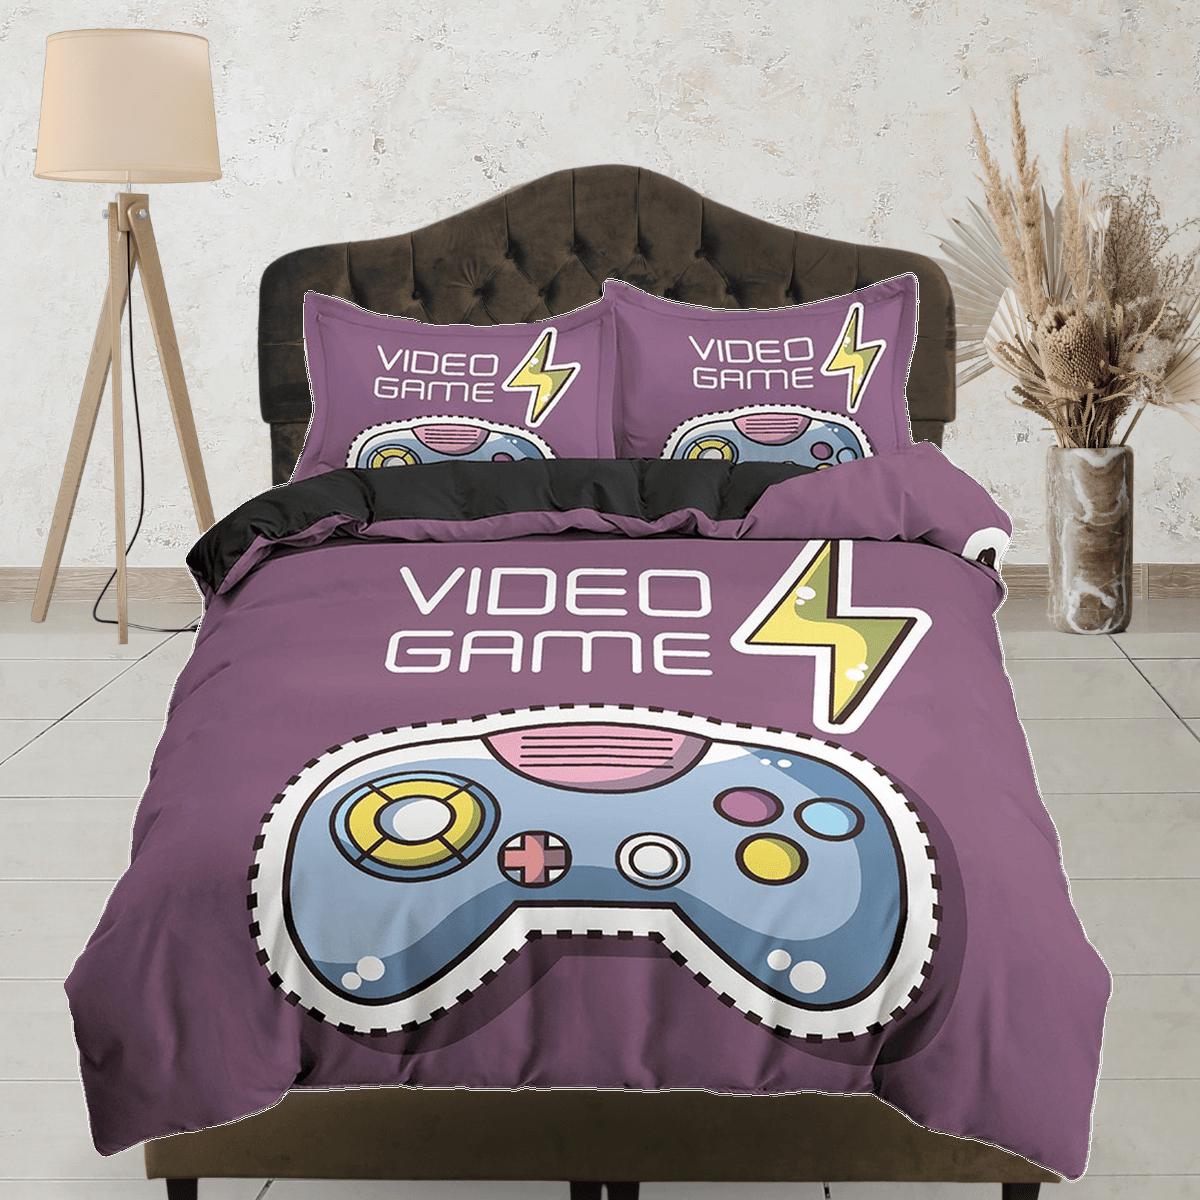 daintyduvet Video game bedding mauve purple duvet cover, gamer boyfriend gift bedding set full king queen twin, boys bedroom, college dorm bedding